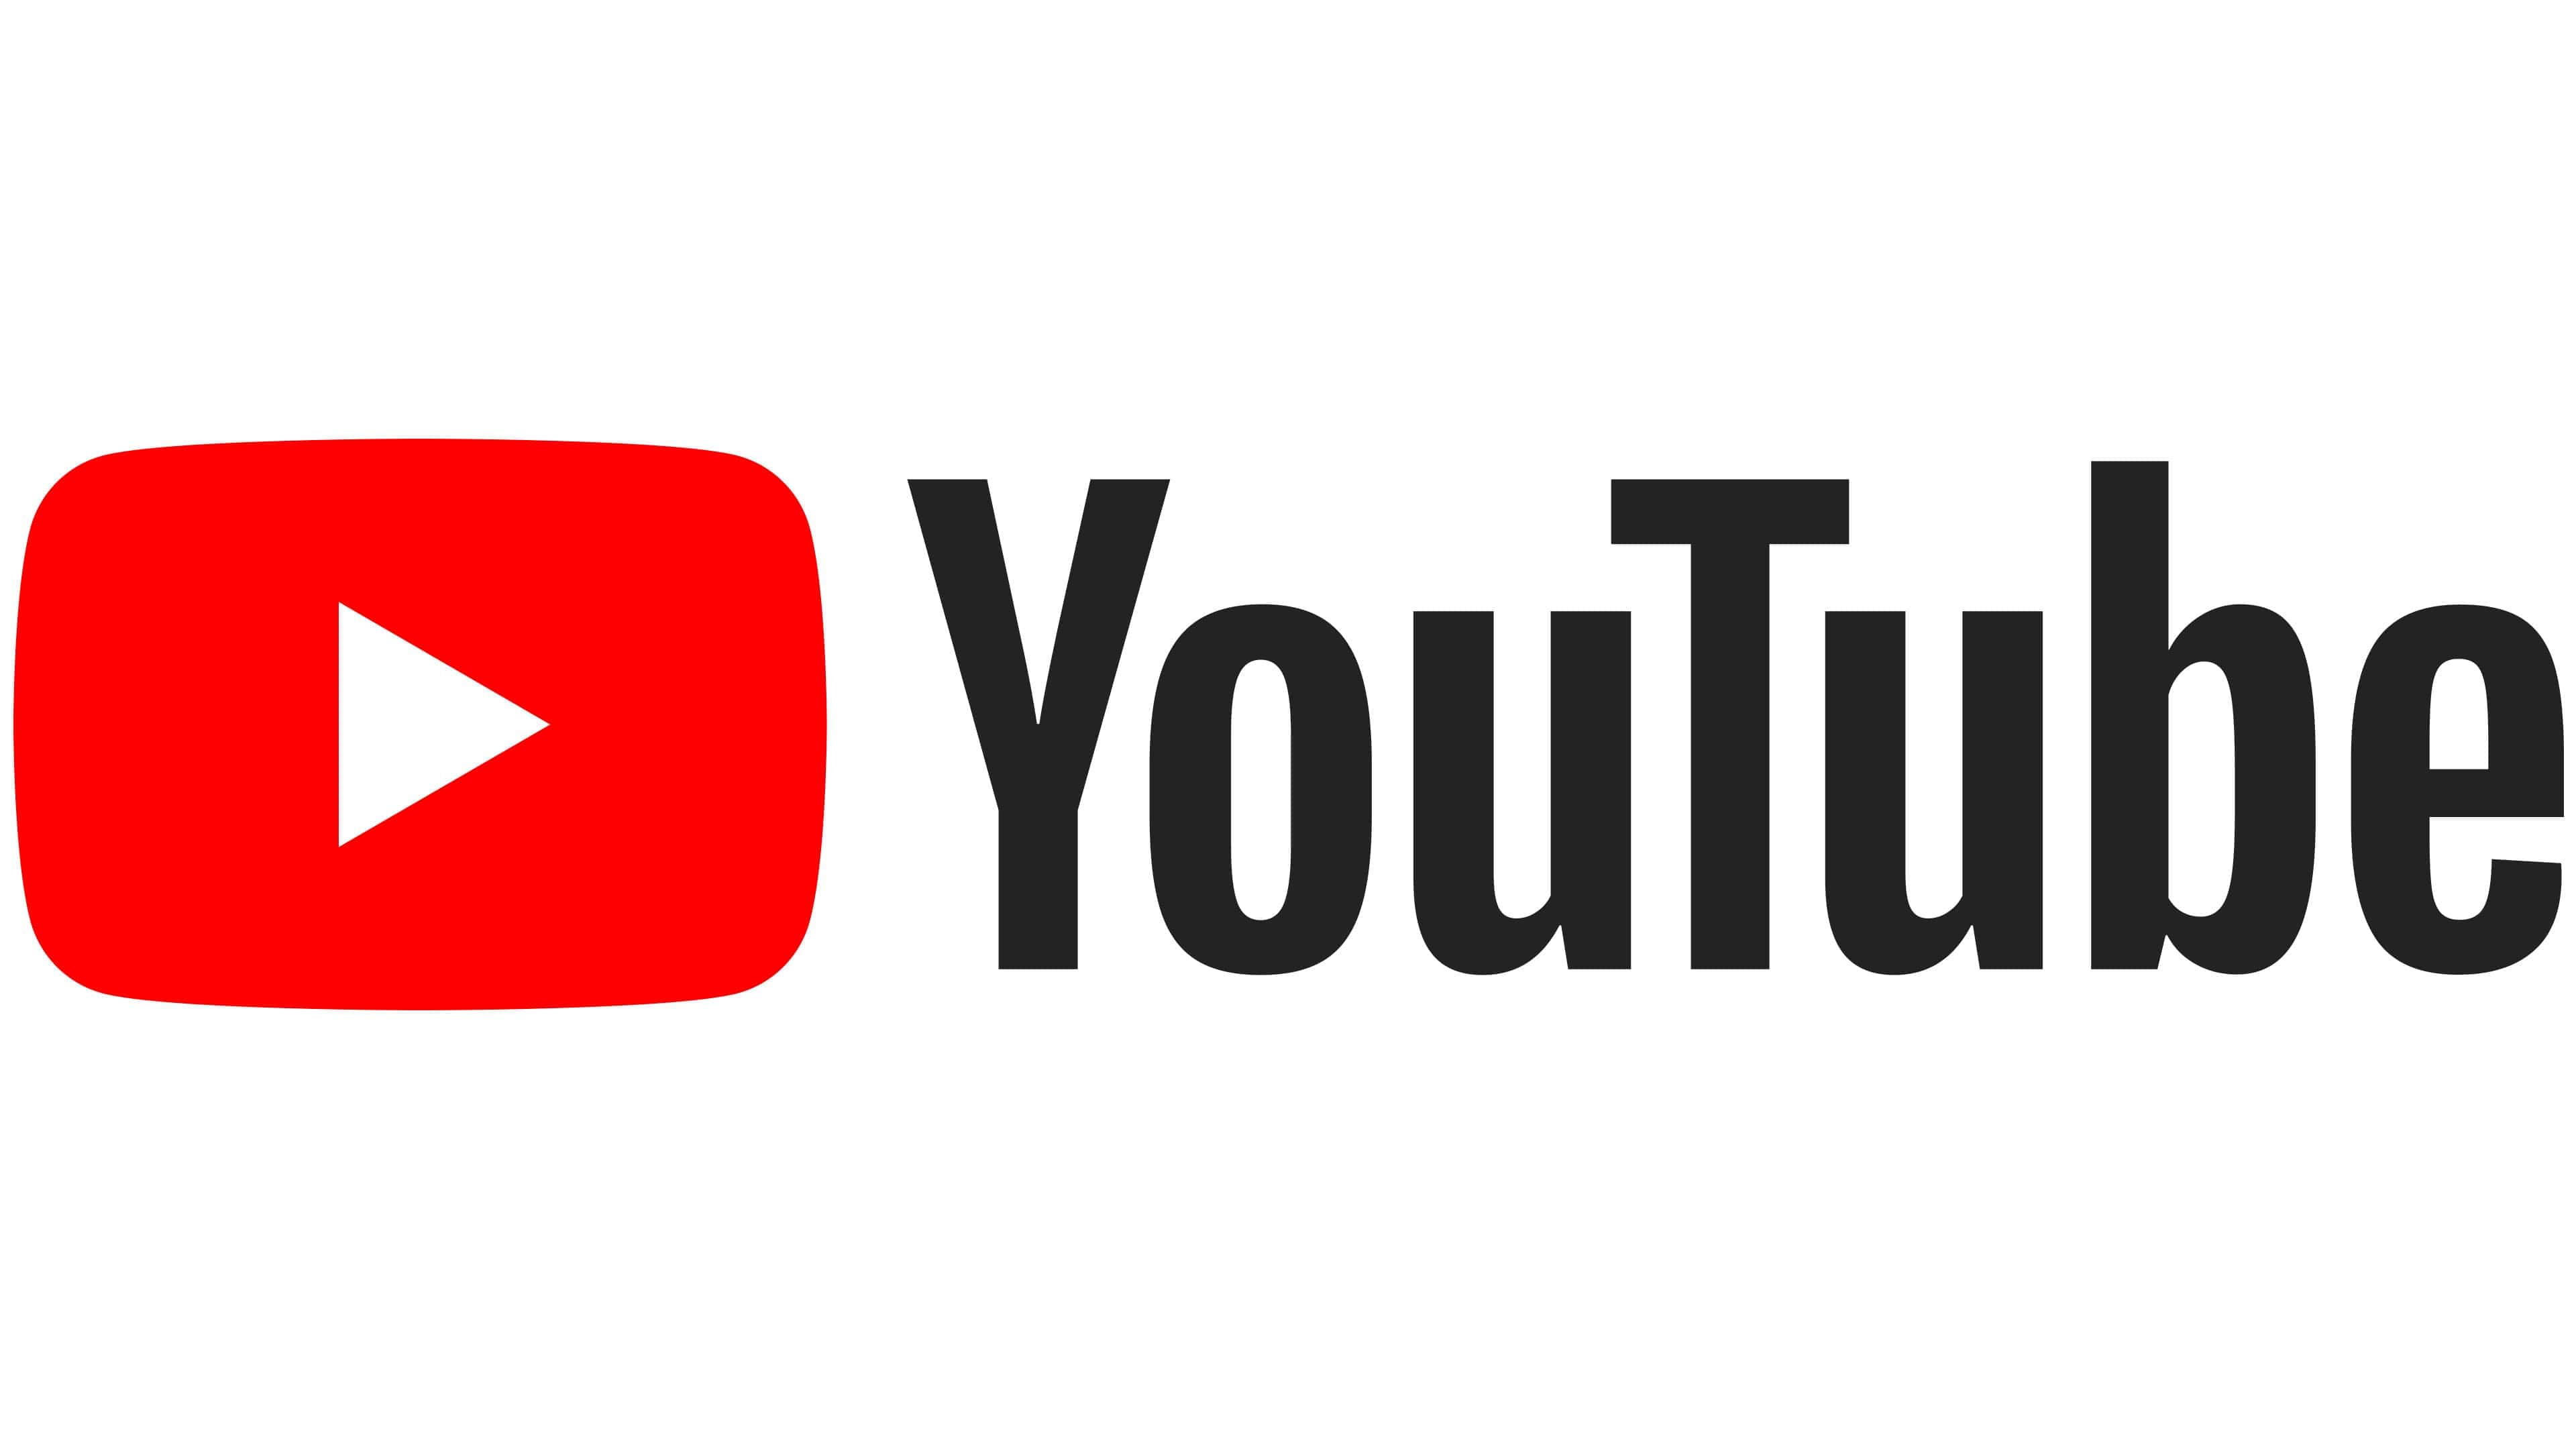 youtube_logo_2017_present_1.jpg